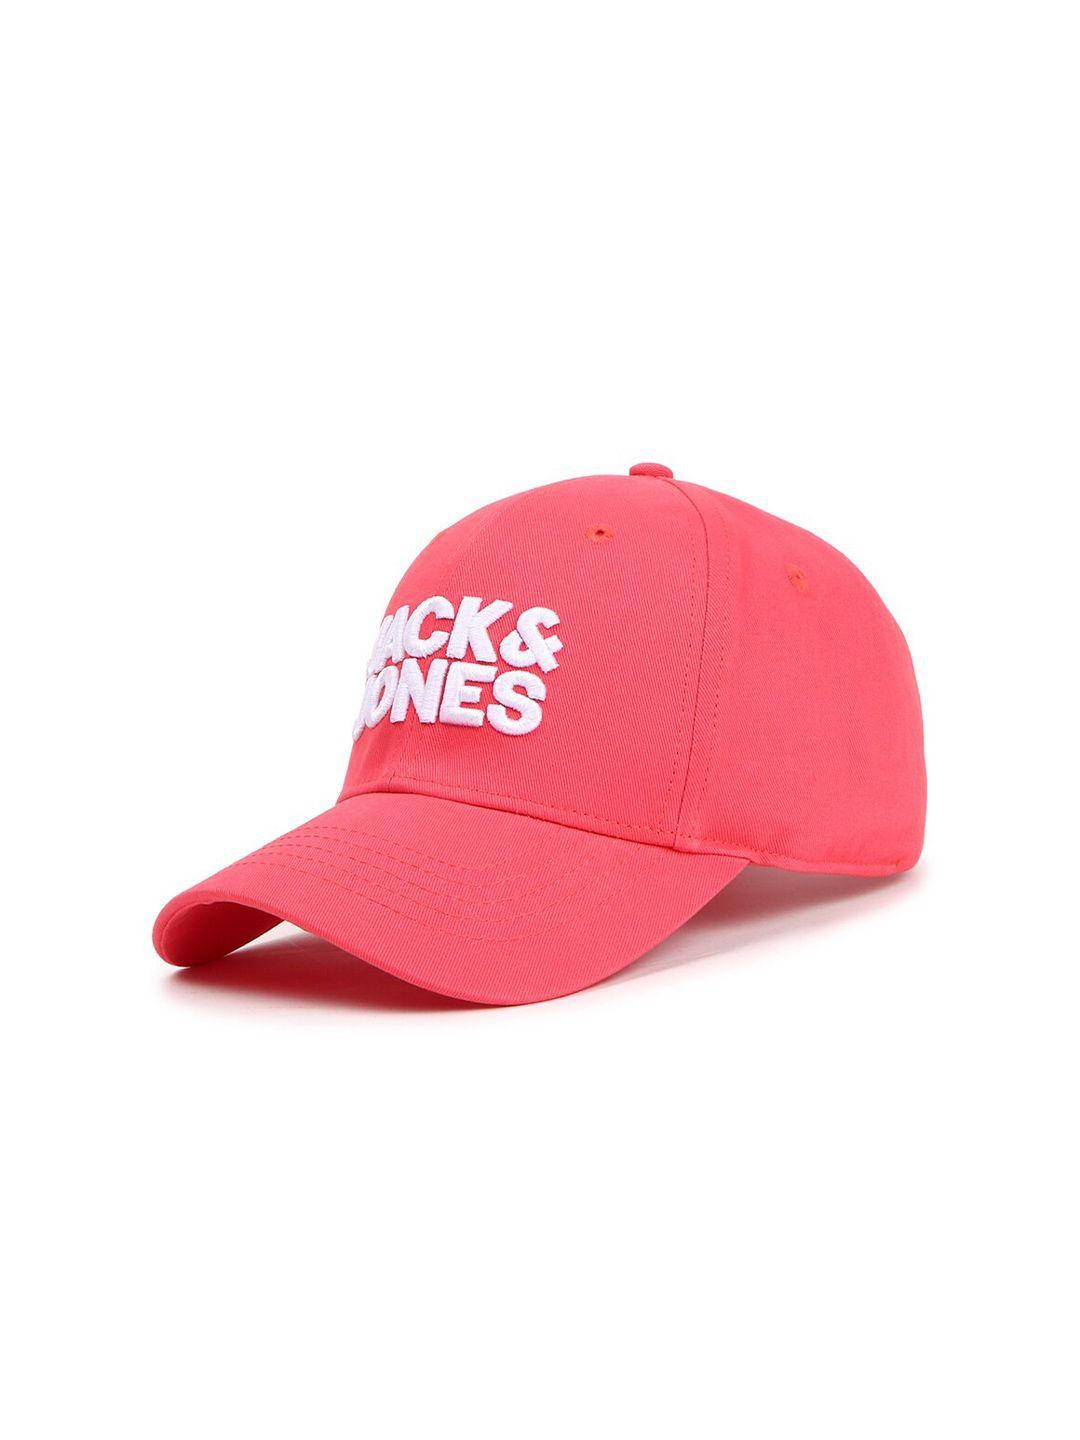 jack-&-jones-men-pink-&-white-baseball-cap